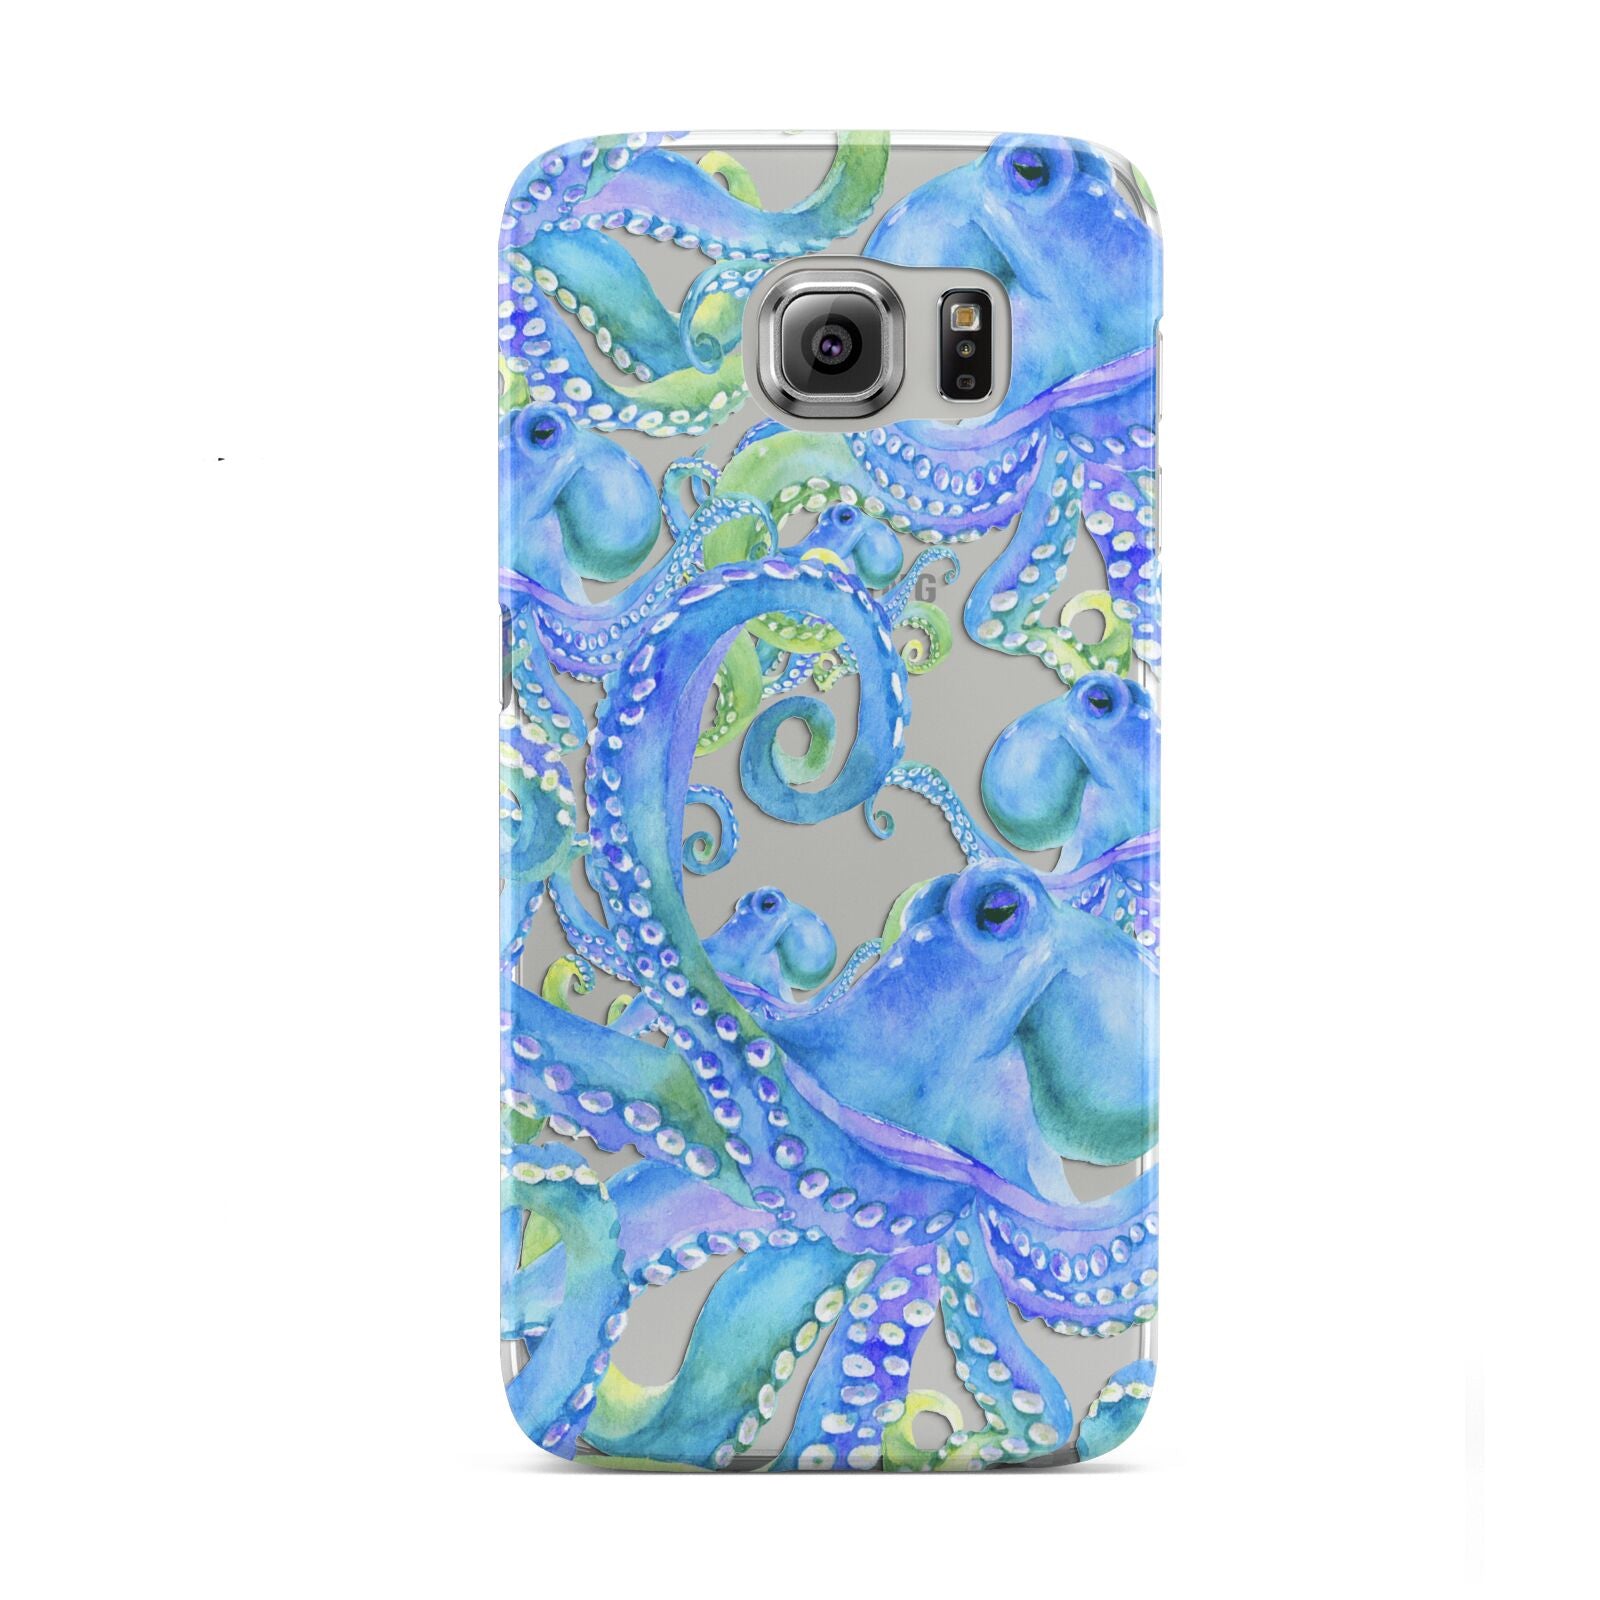 Octopus Samsung Galaxy S6 Case